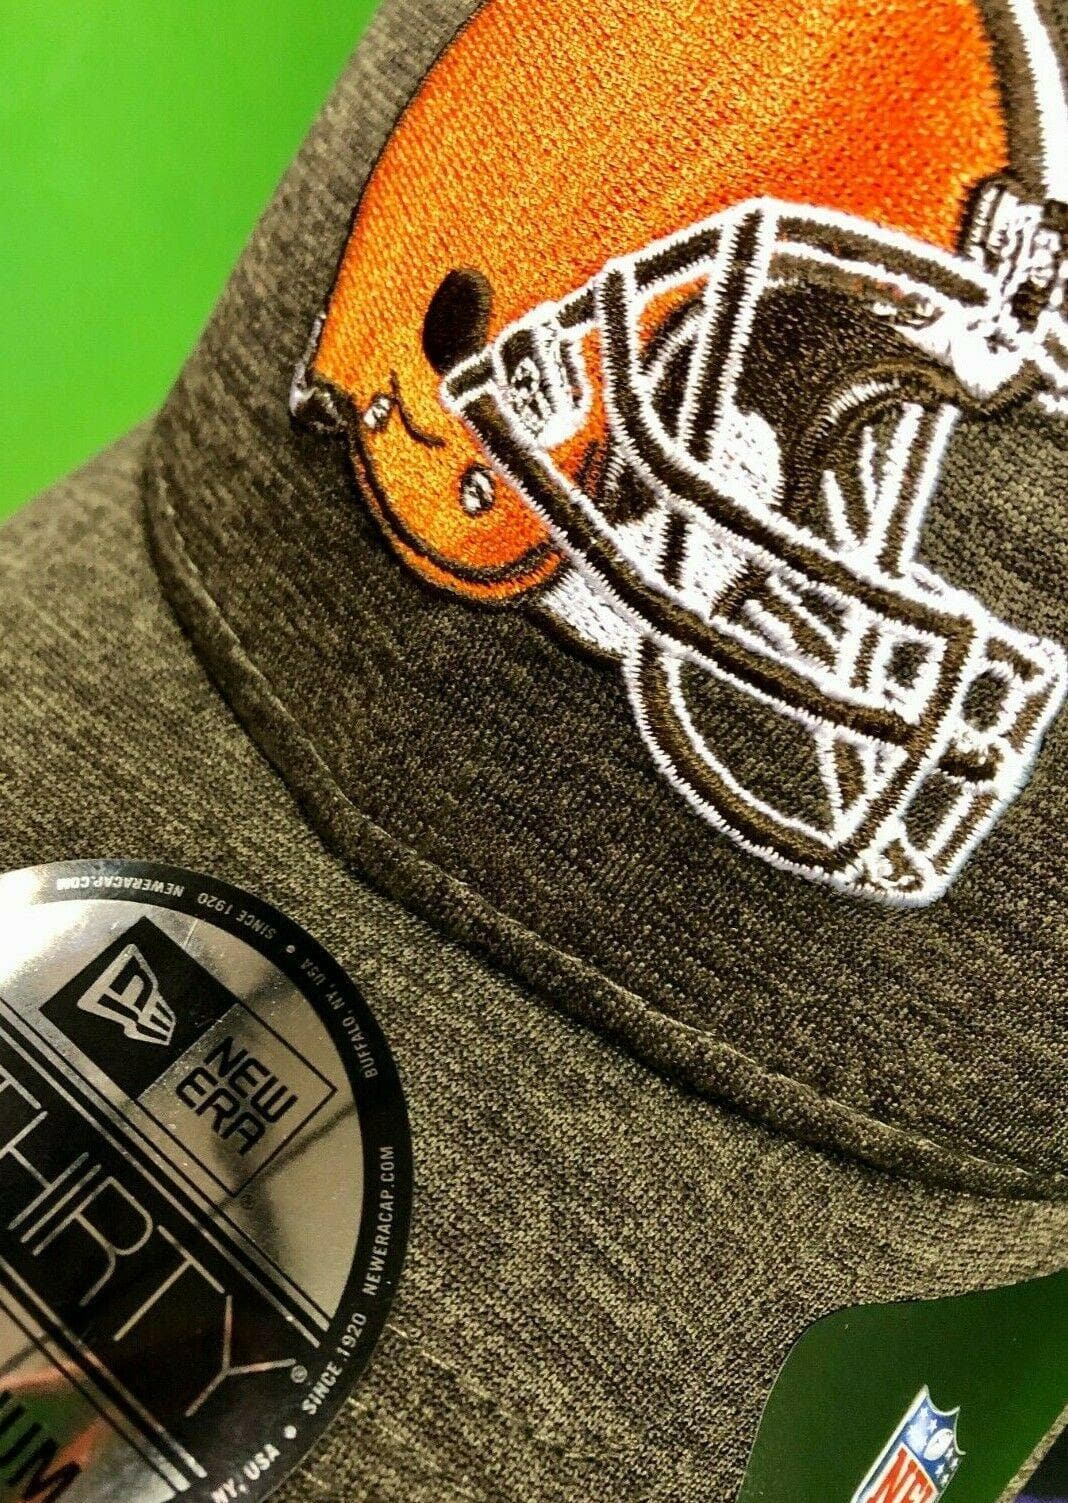 NFL Cleveland Browns New Era 39THIRTY Sideline Hat Cap NWT L-XL